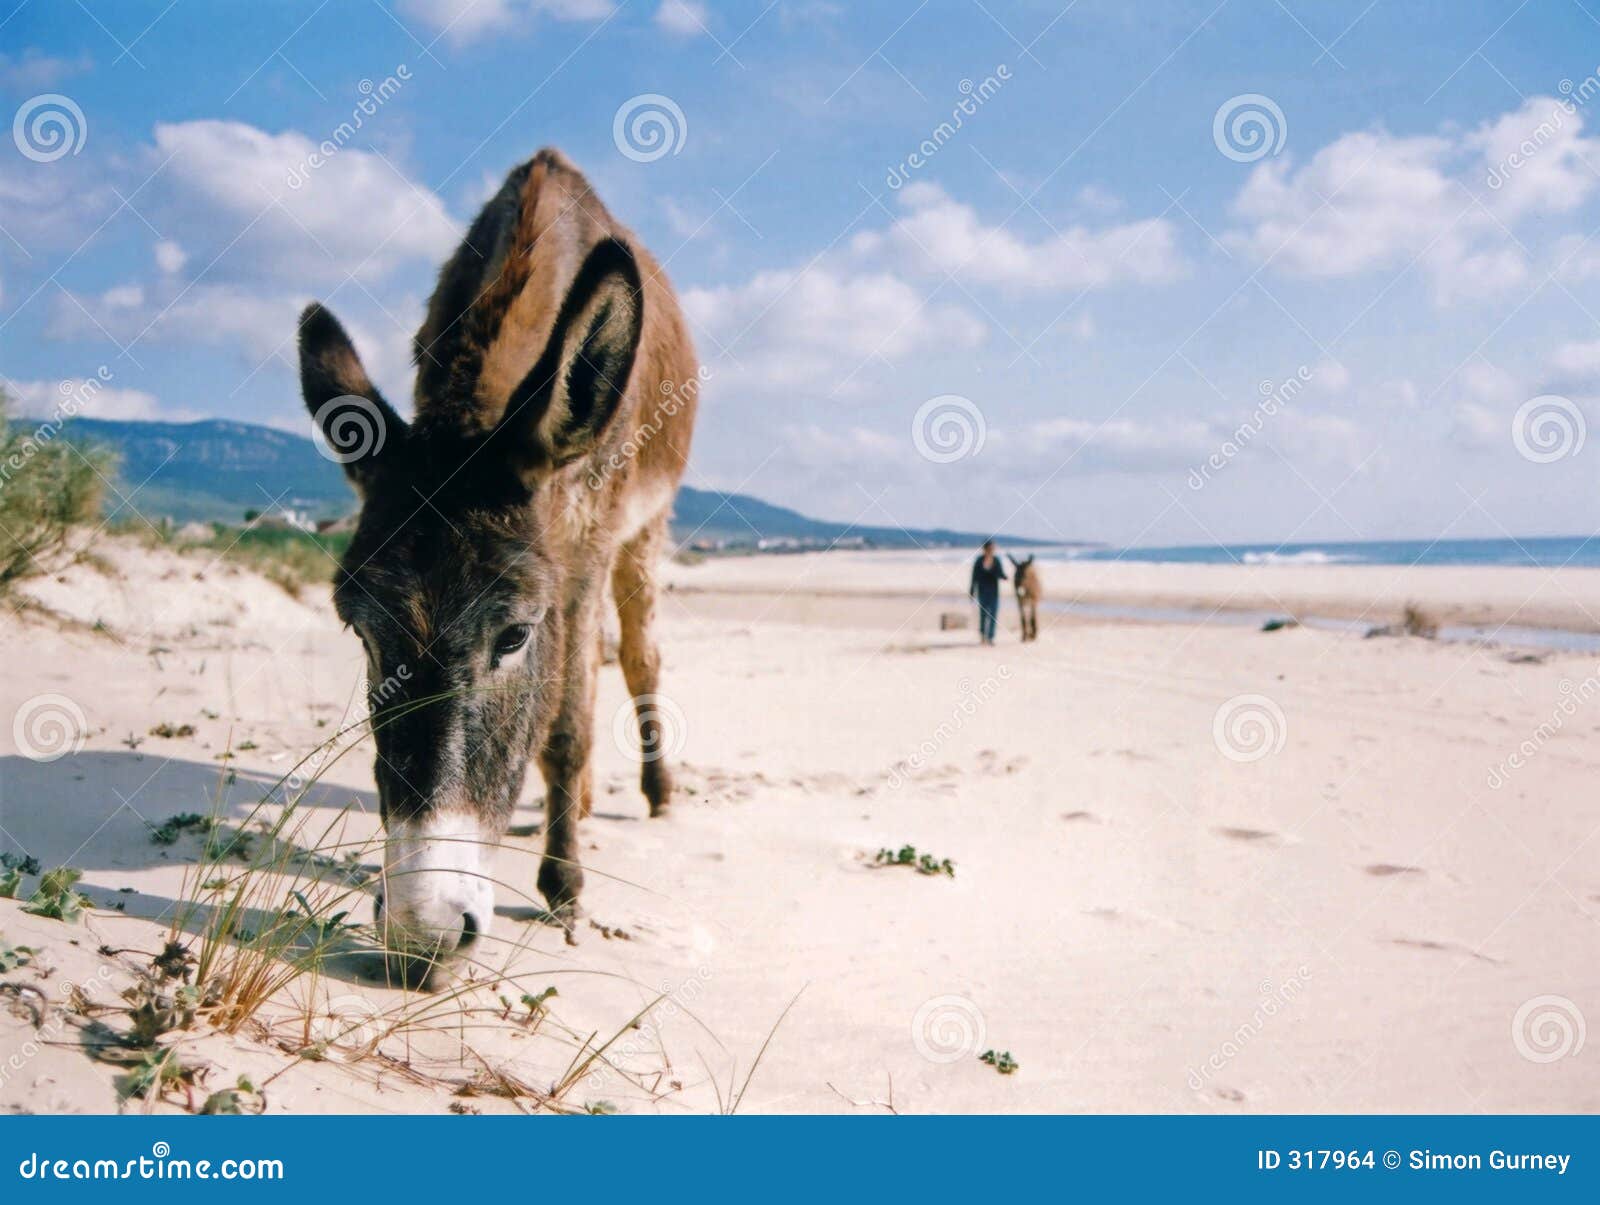 burro on the beach andalucia spain